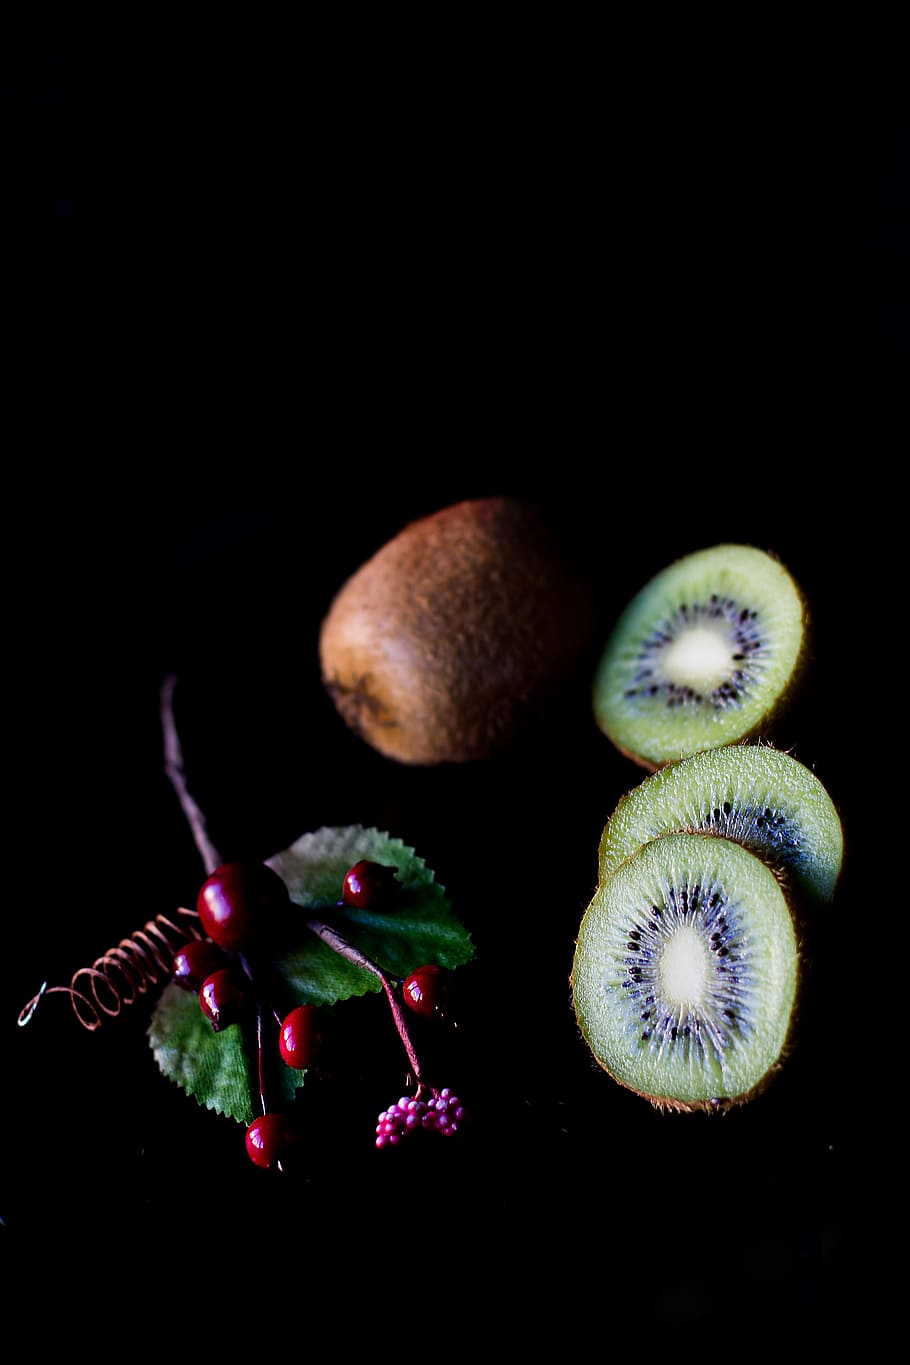 belo kiwi, fechar-se, escuro, fruta, verde, saudável, kiwi, minimalista, simplista, frescura